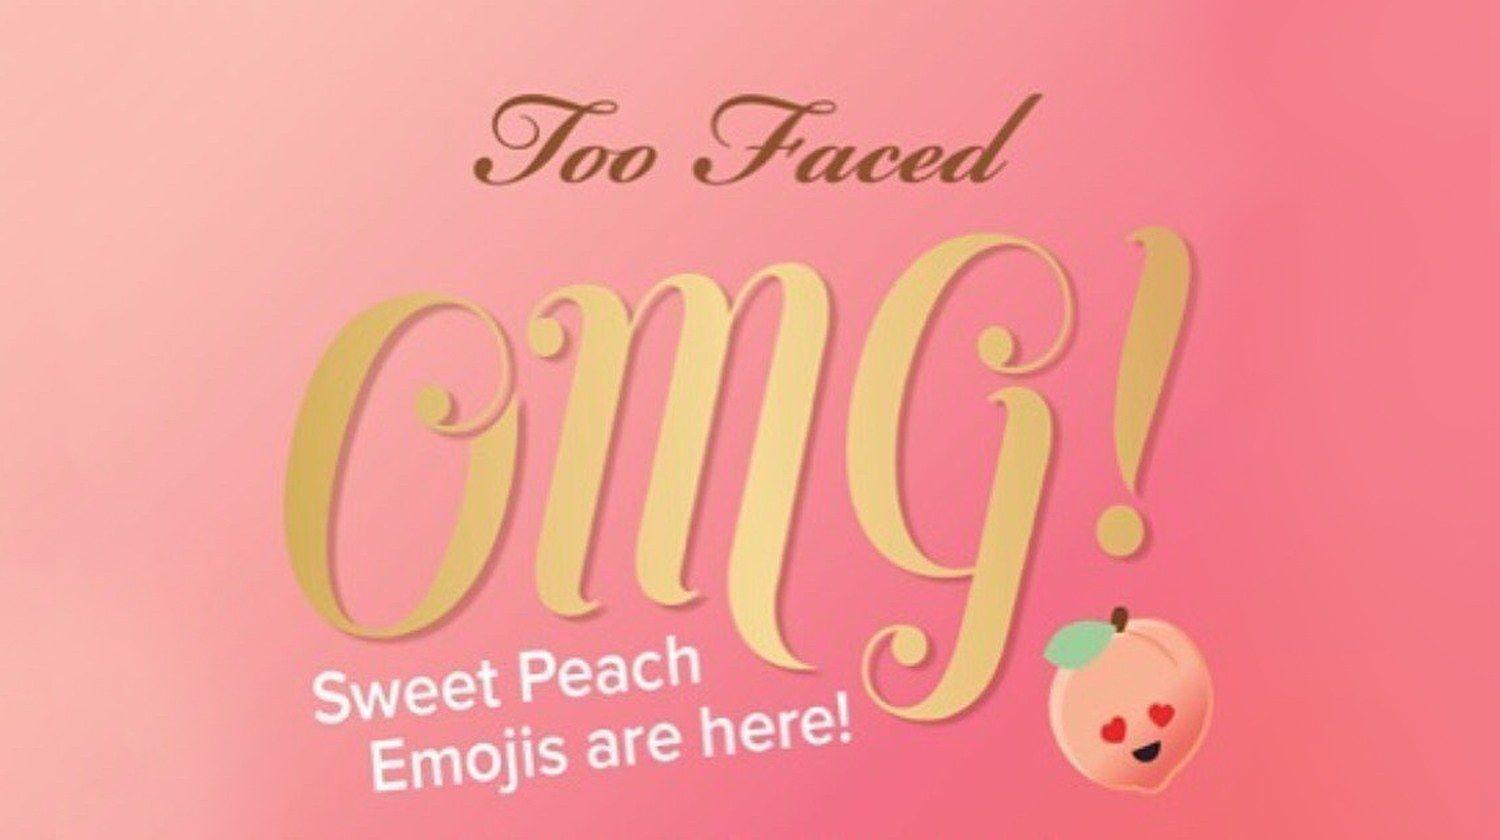 Too Faced Logo - Too faced sweet peach Logos